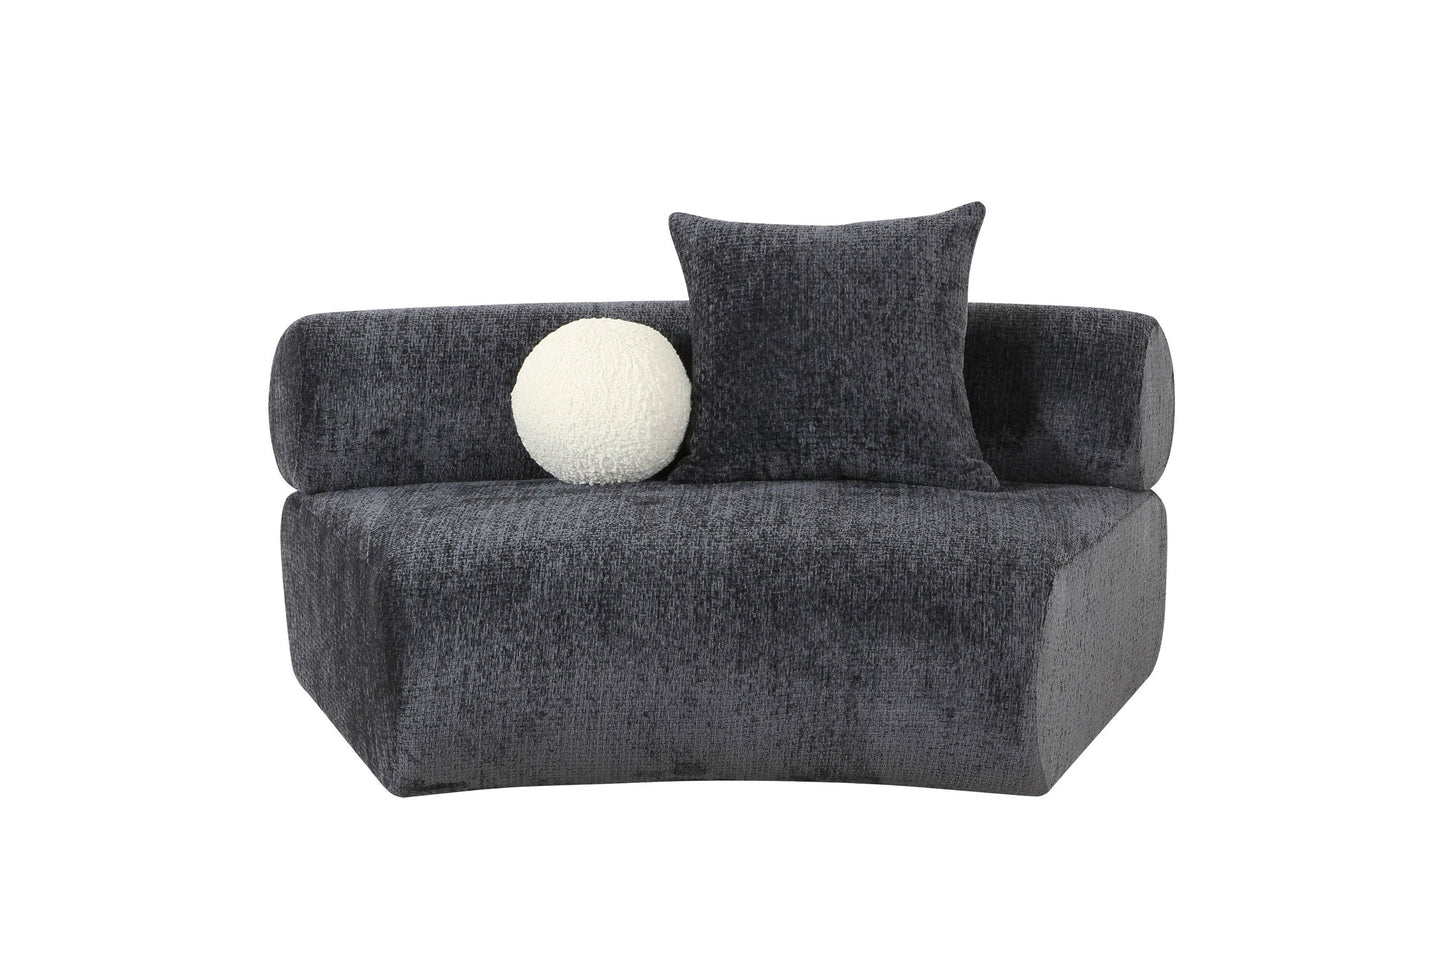 Divani Casa Simpson - Contemporary Dark Grey Fabric Curved Modular Sectional Sofa with Throw Pillows